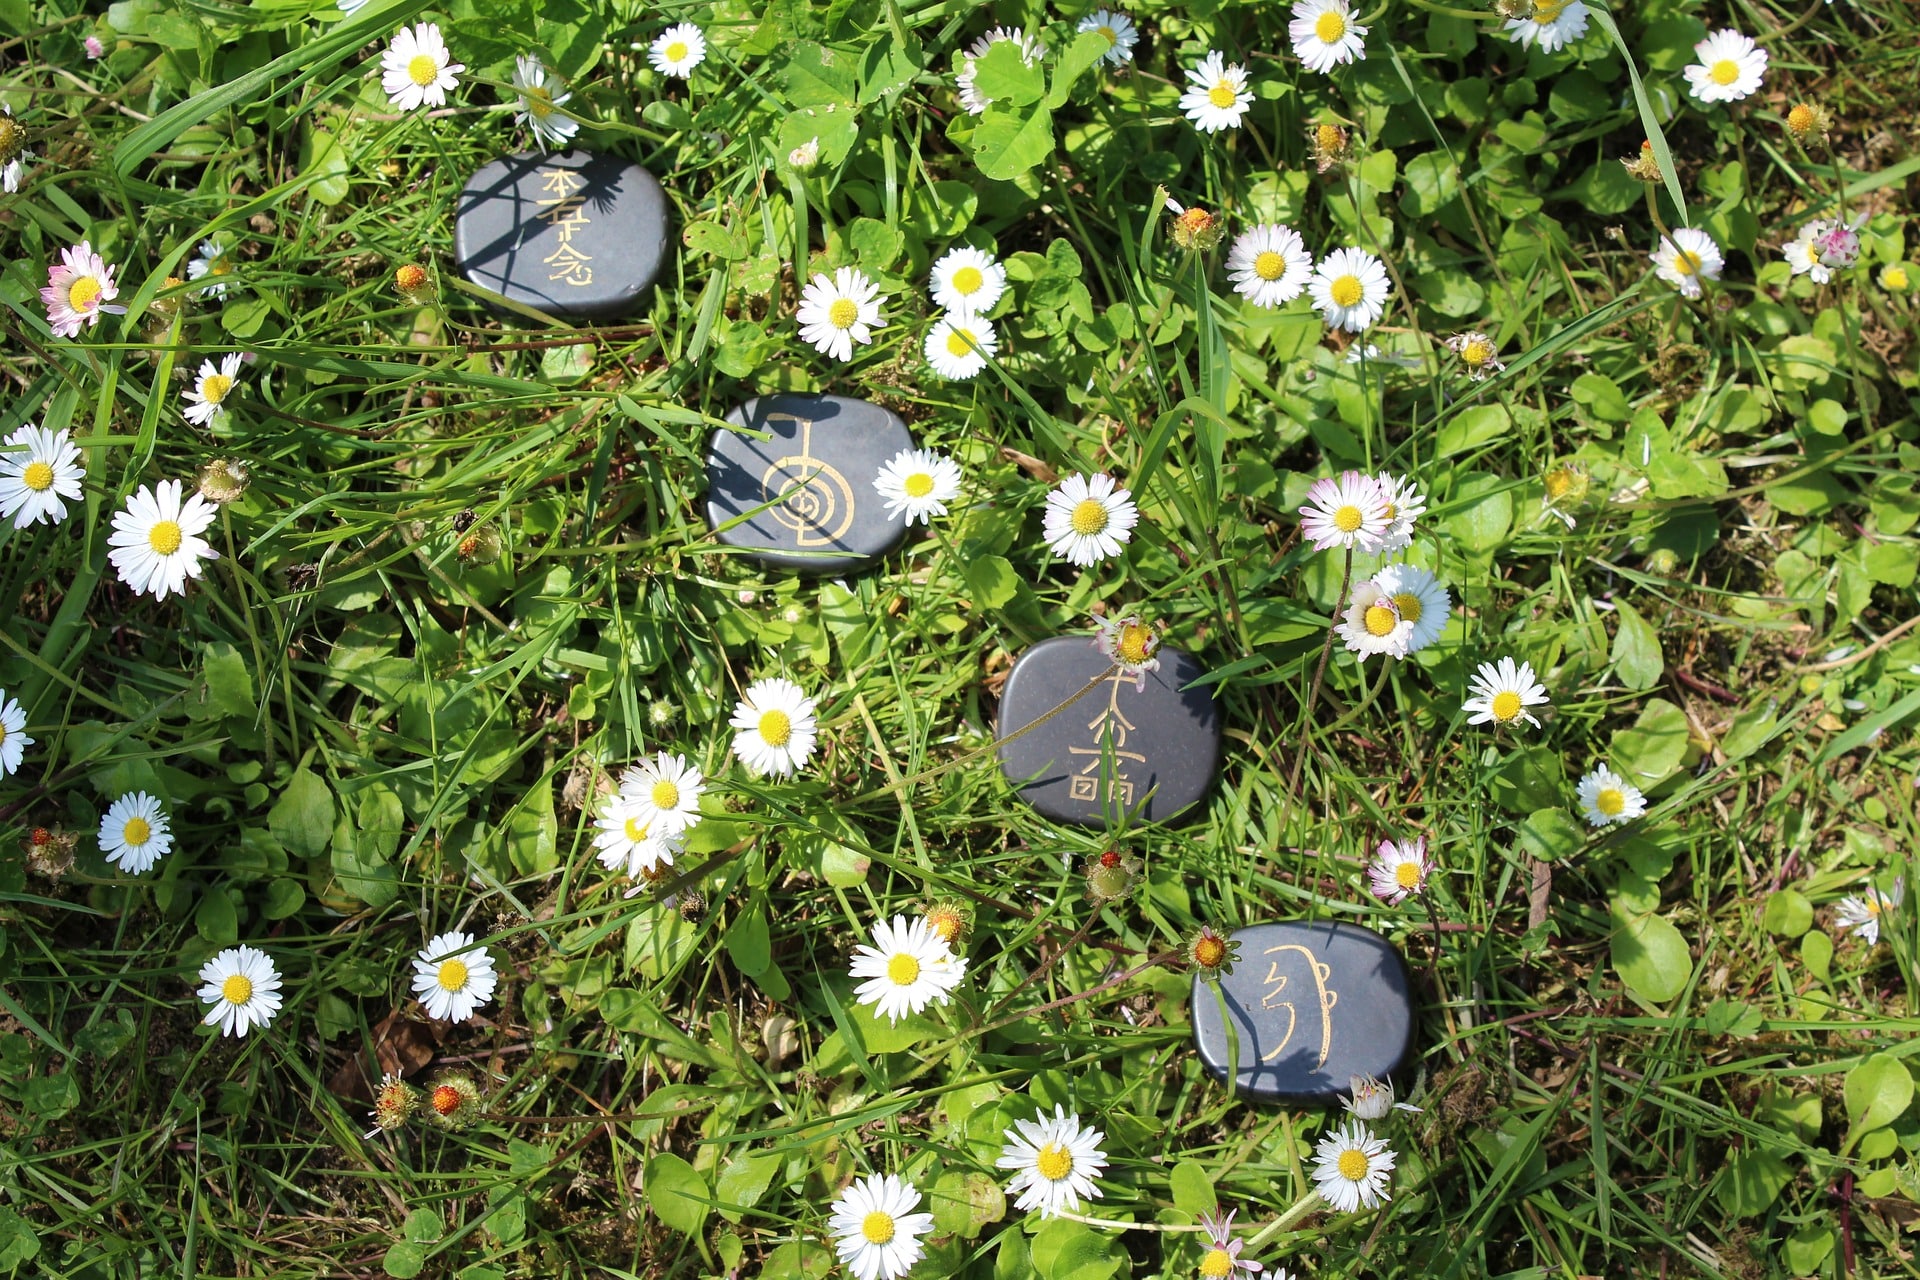 polished stones with reiki symbols